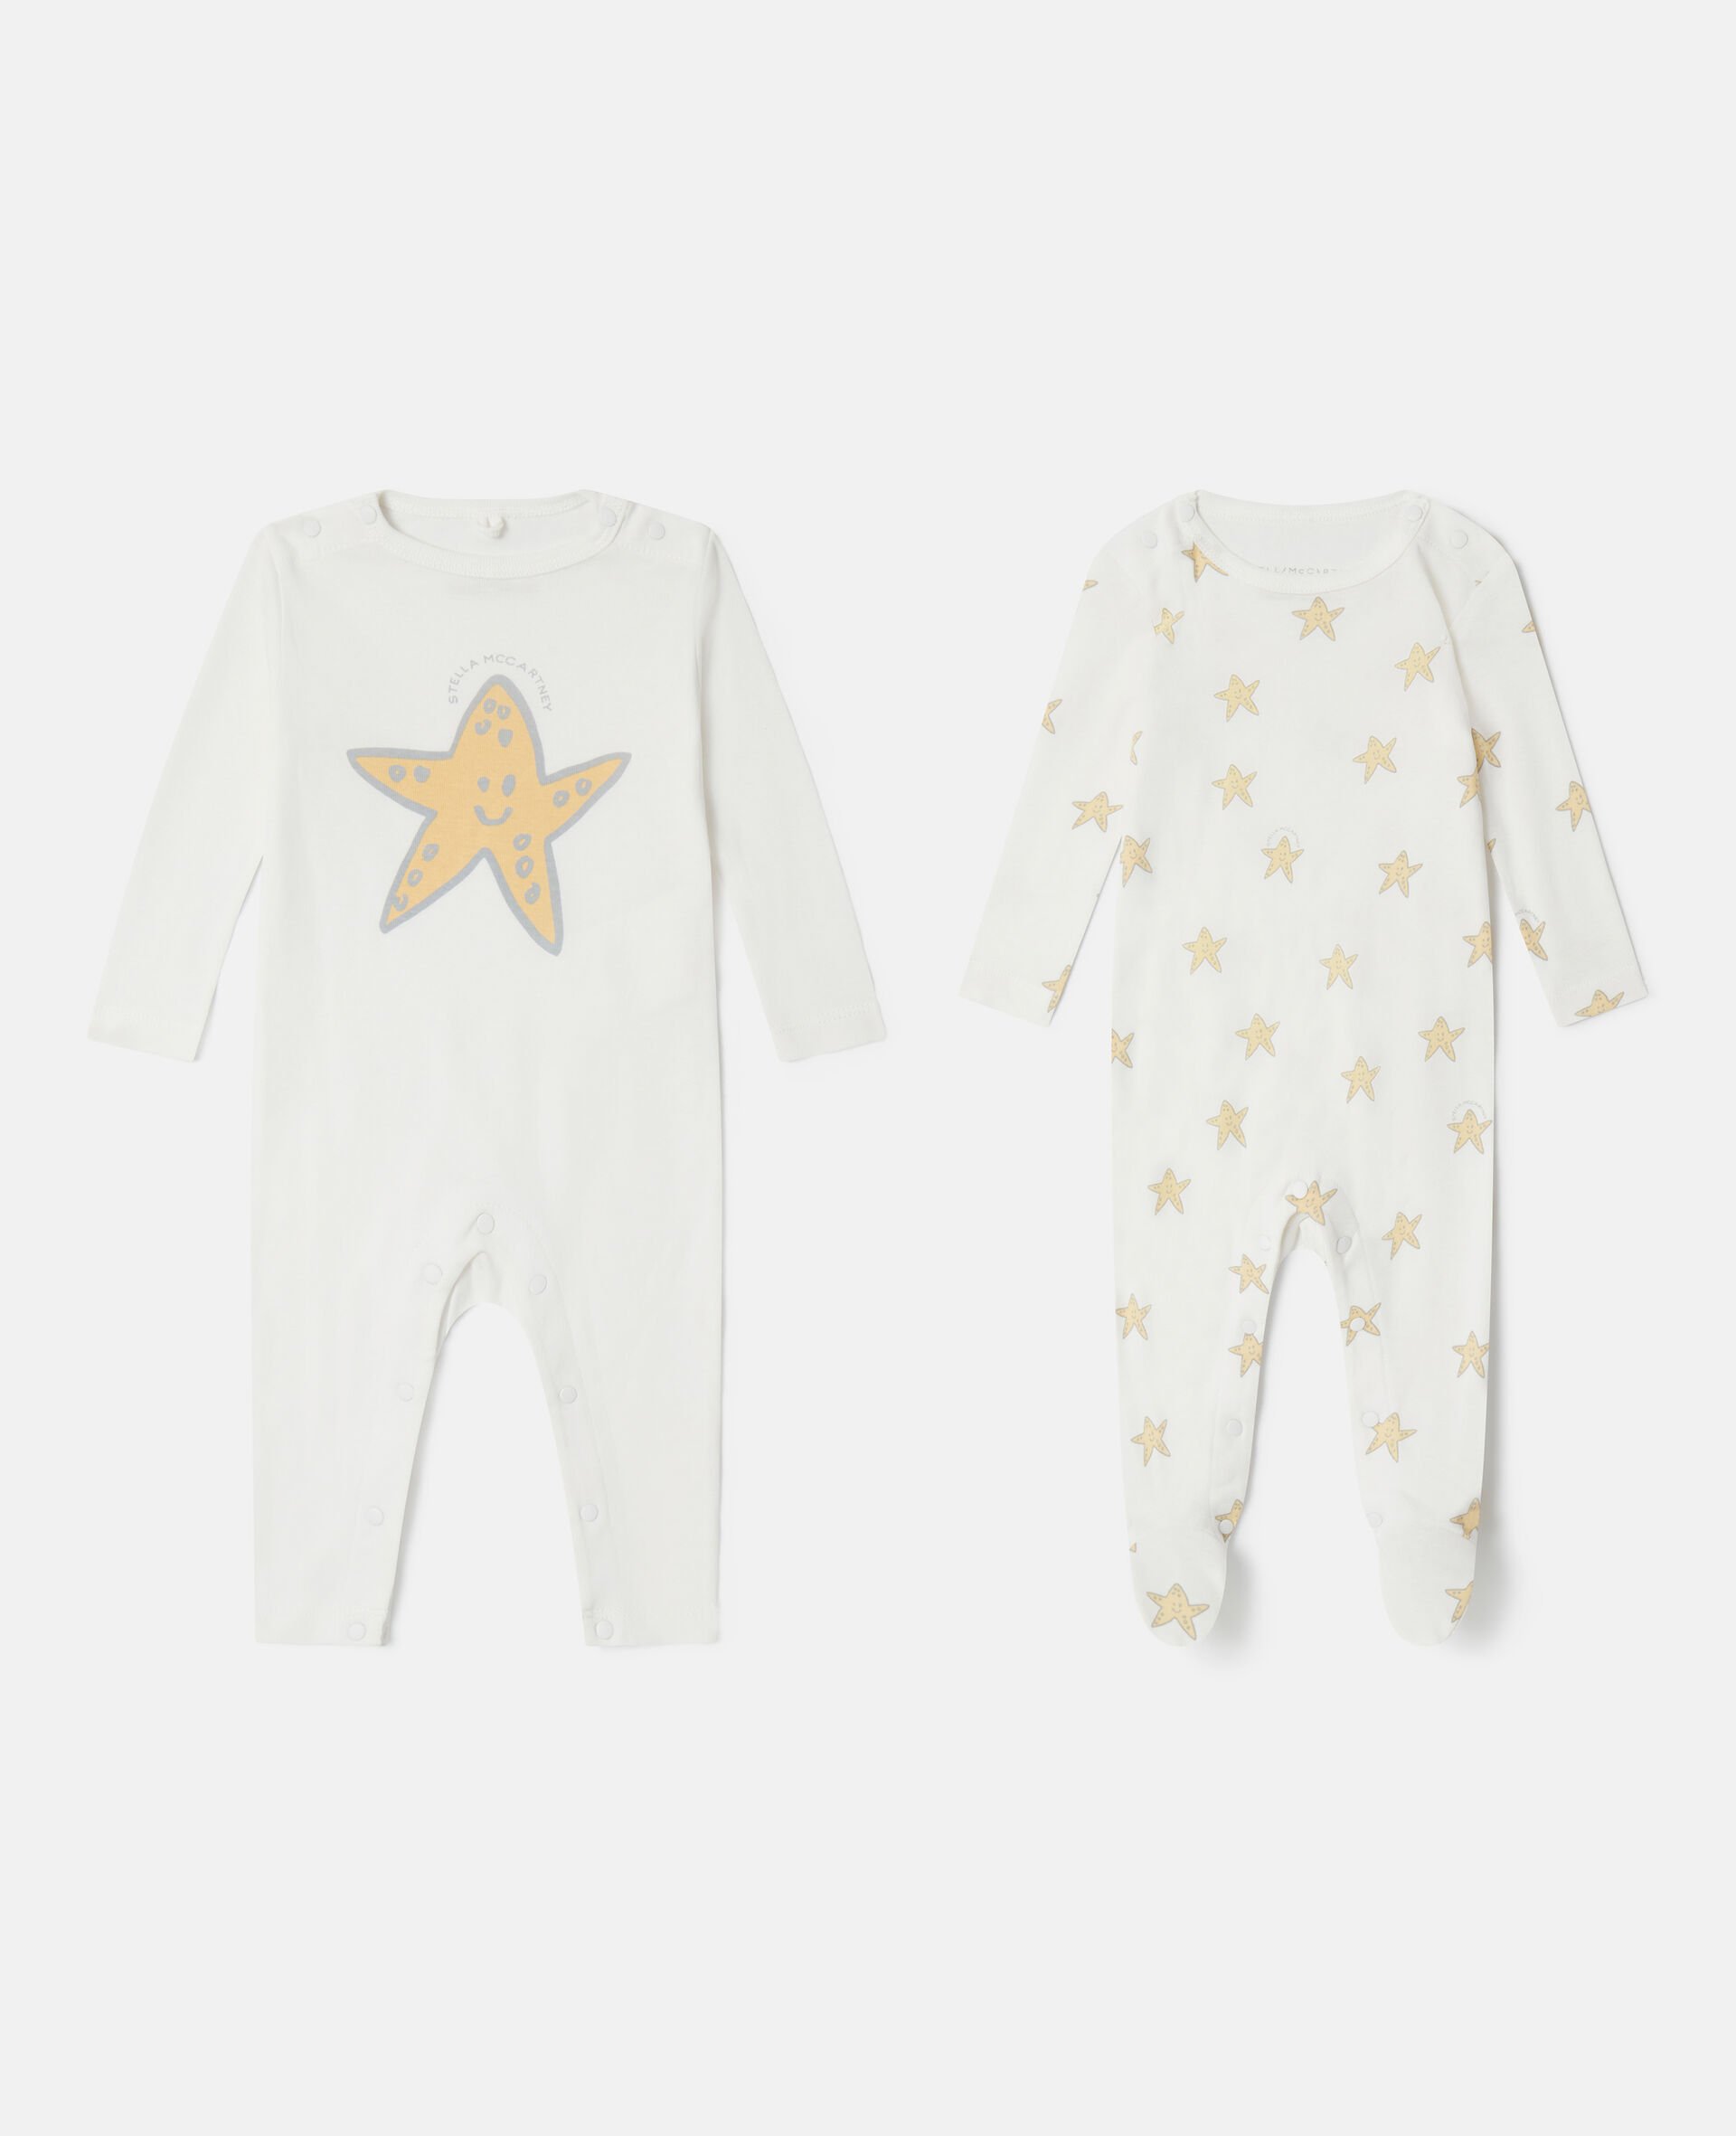 Smiling Stella Star Print Sleepsuit Set-Multicolour-large image number 0